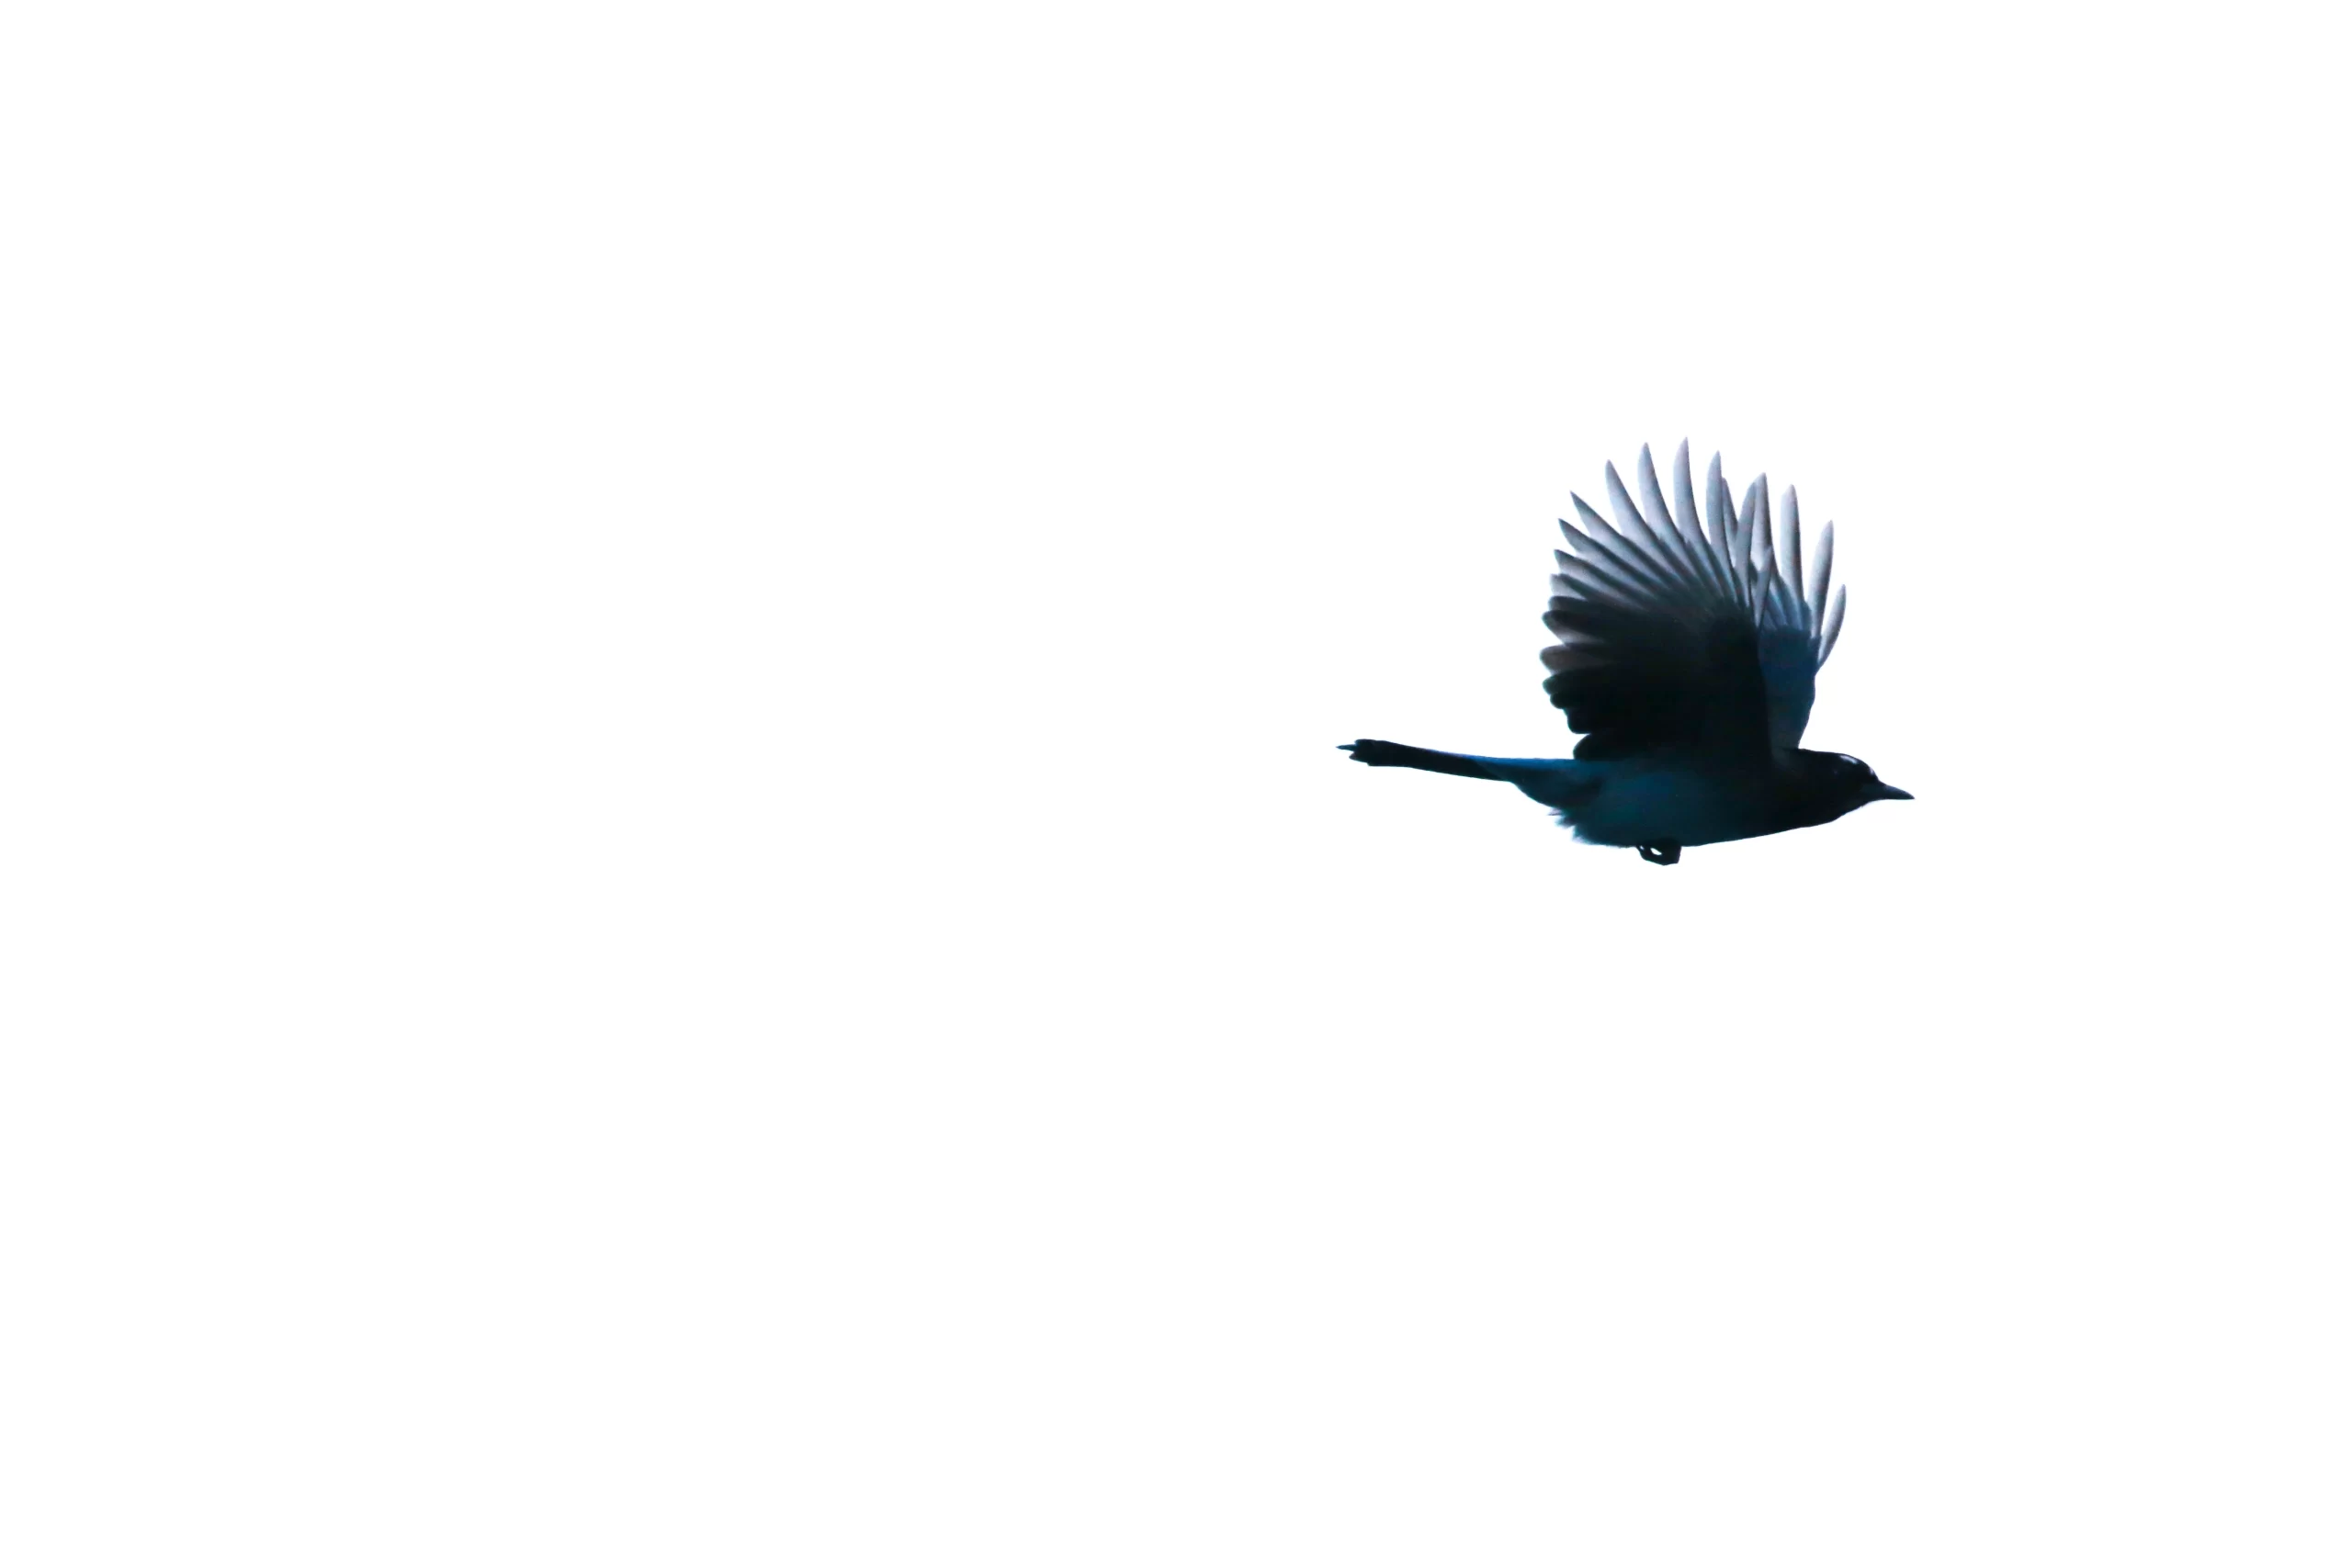 patrick-hendry-crow against white sky-unsplash